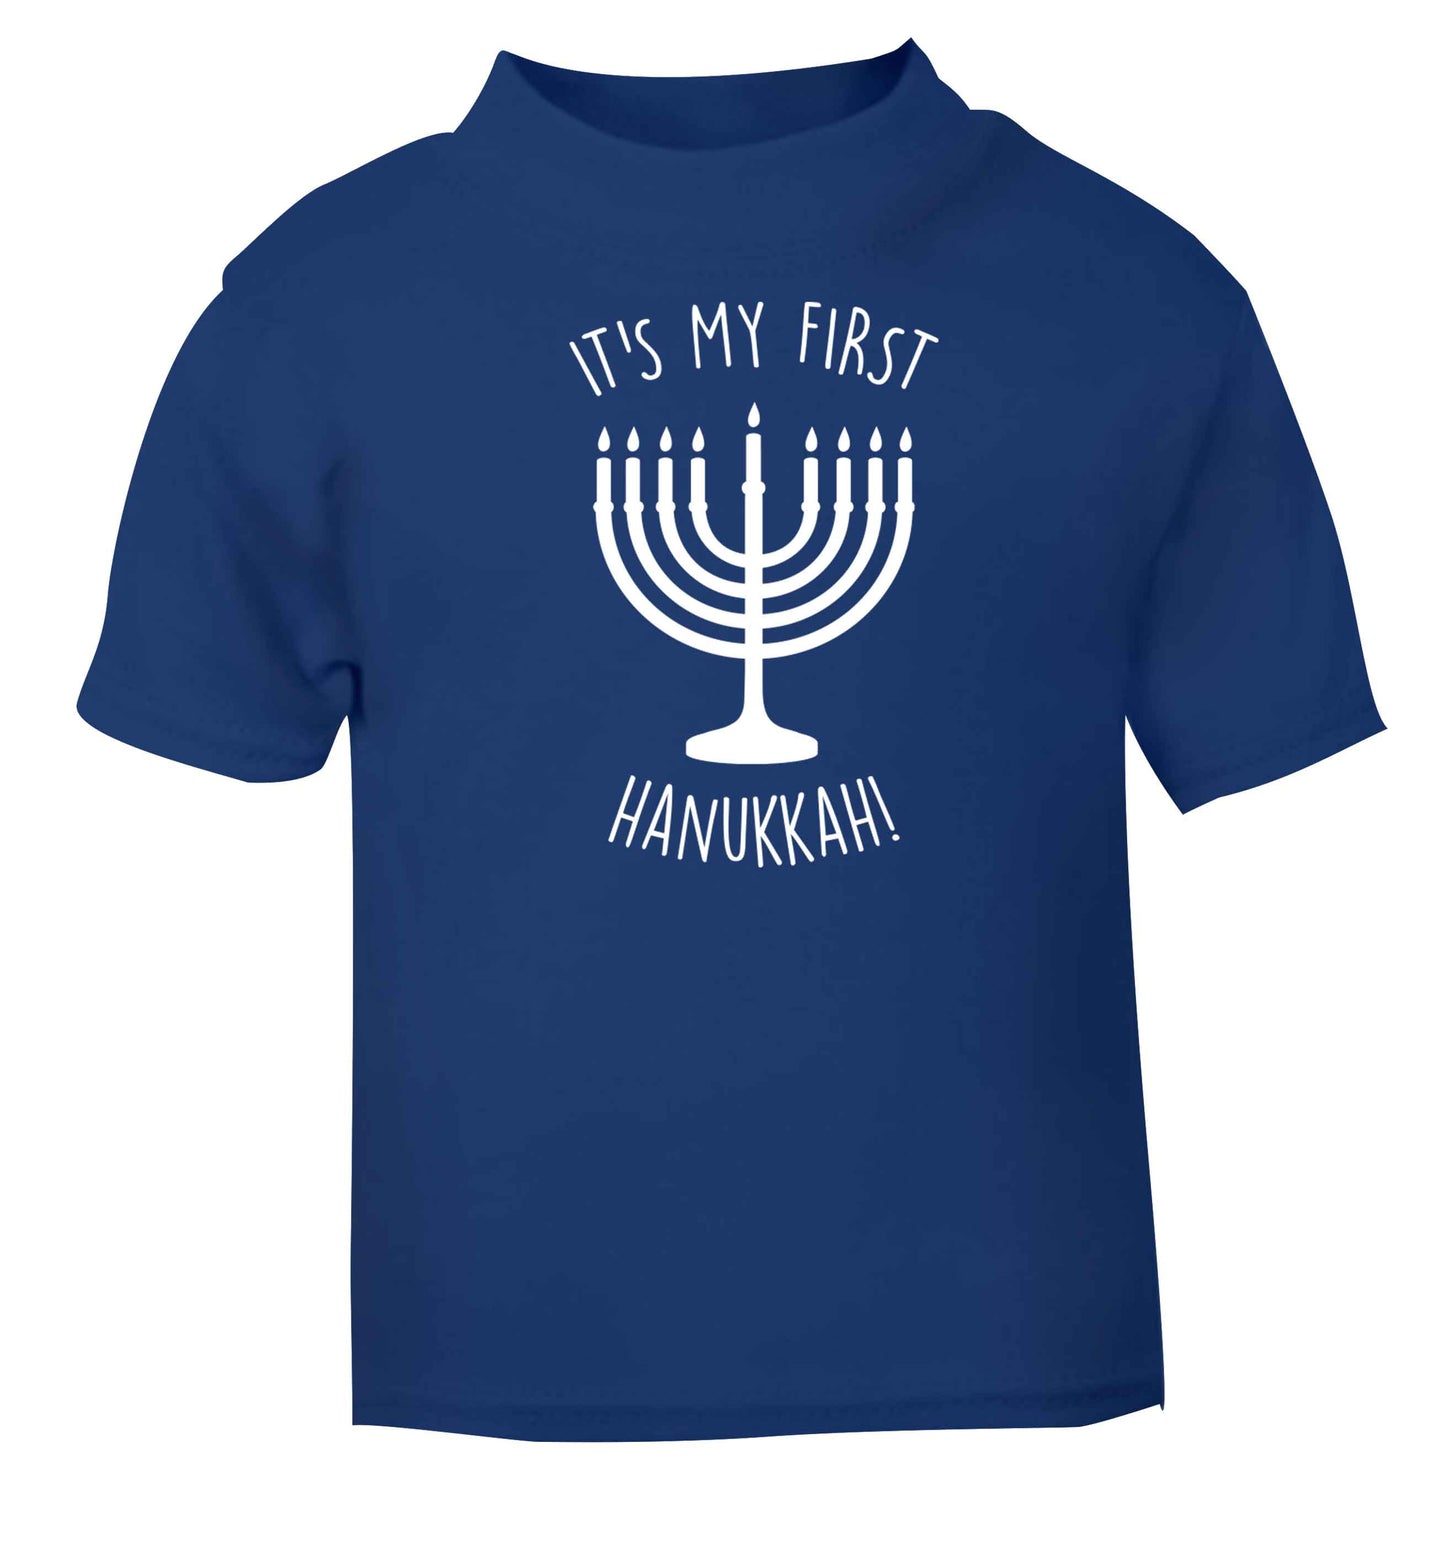 It's my first hanukkah blue baby toddler Tshirt 2 Years